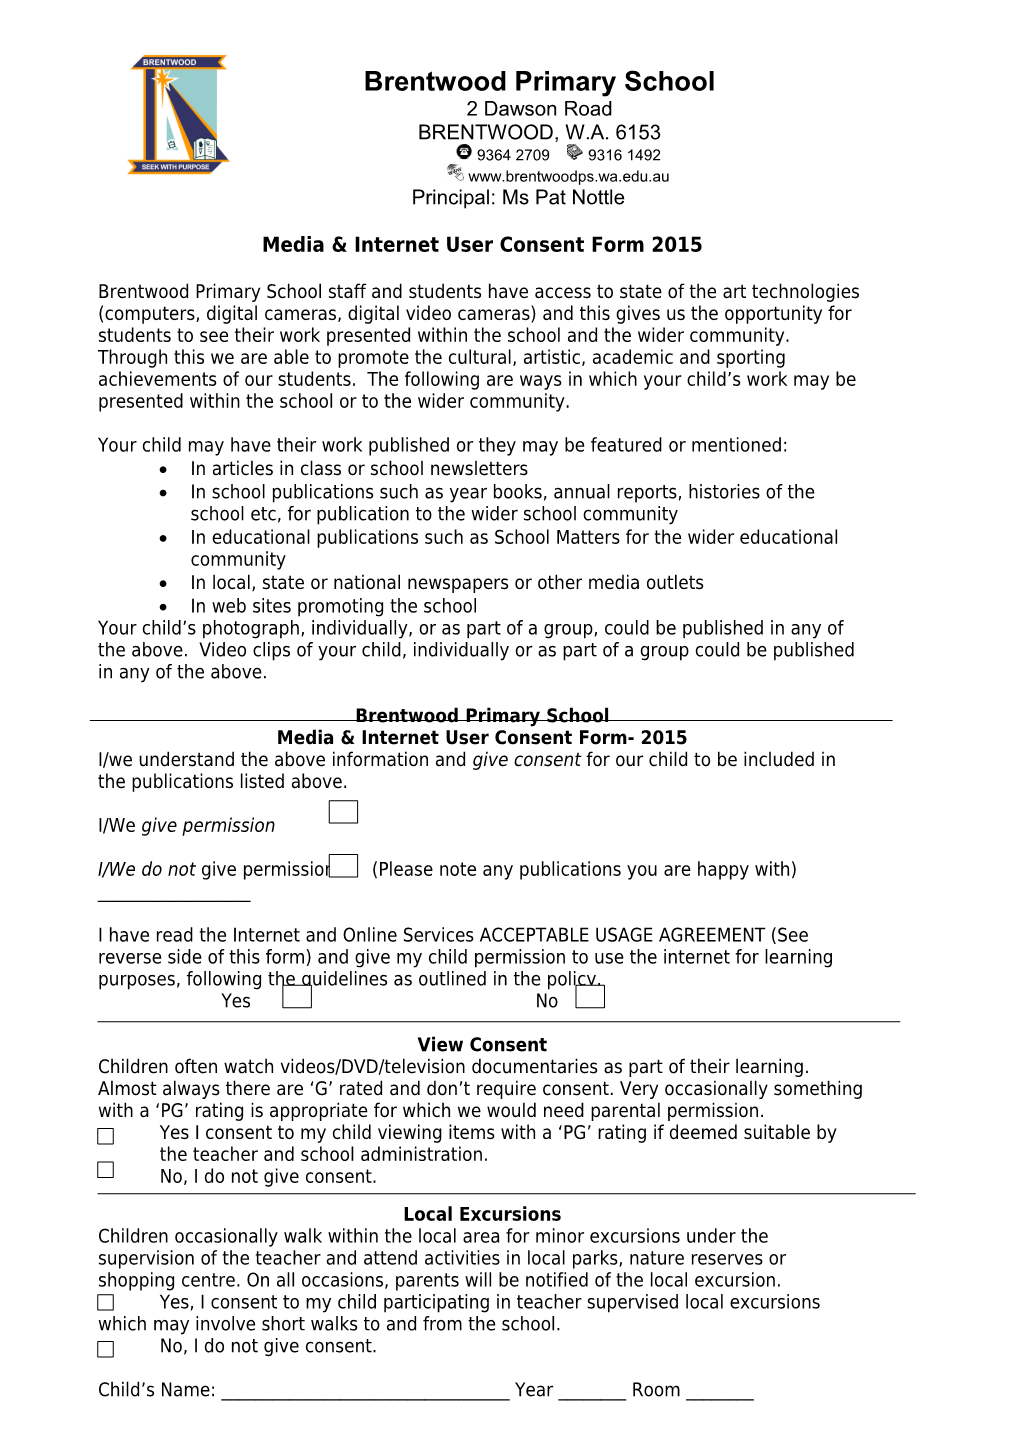 Media & Internet User Consent Form 2008